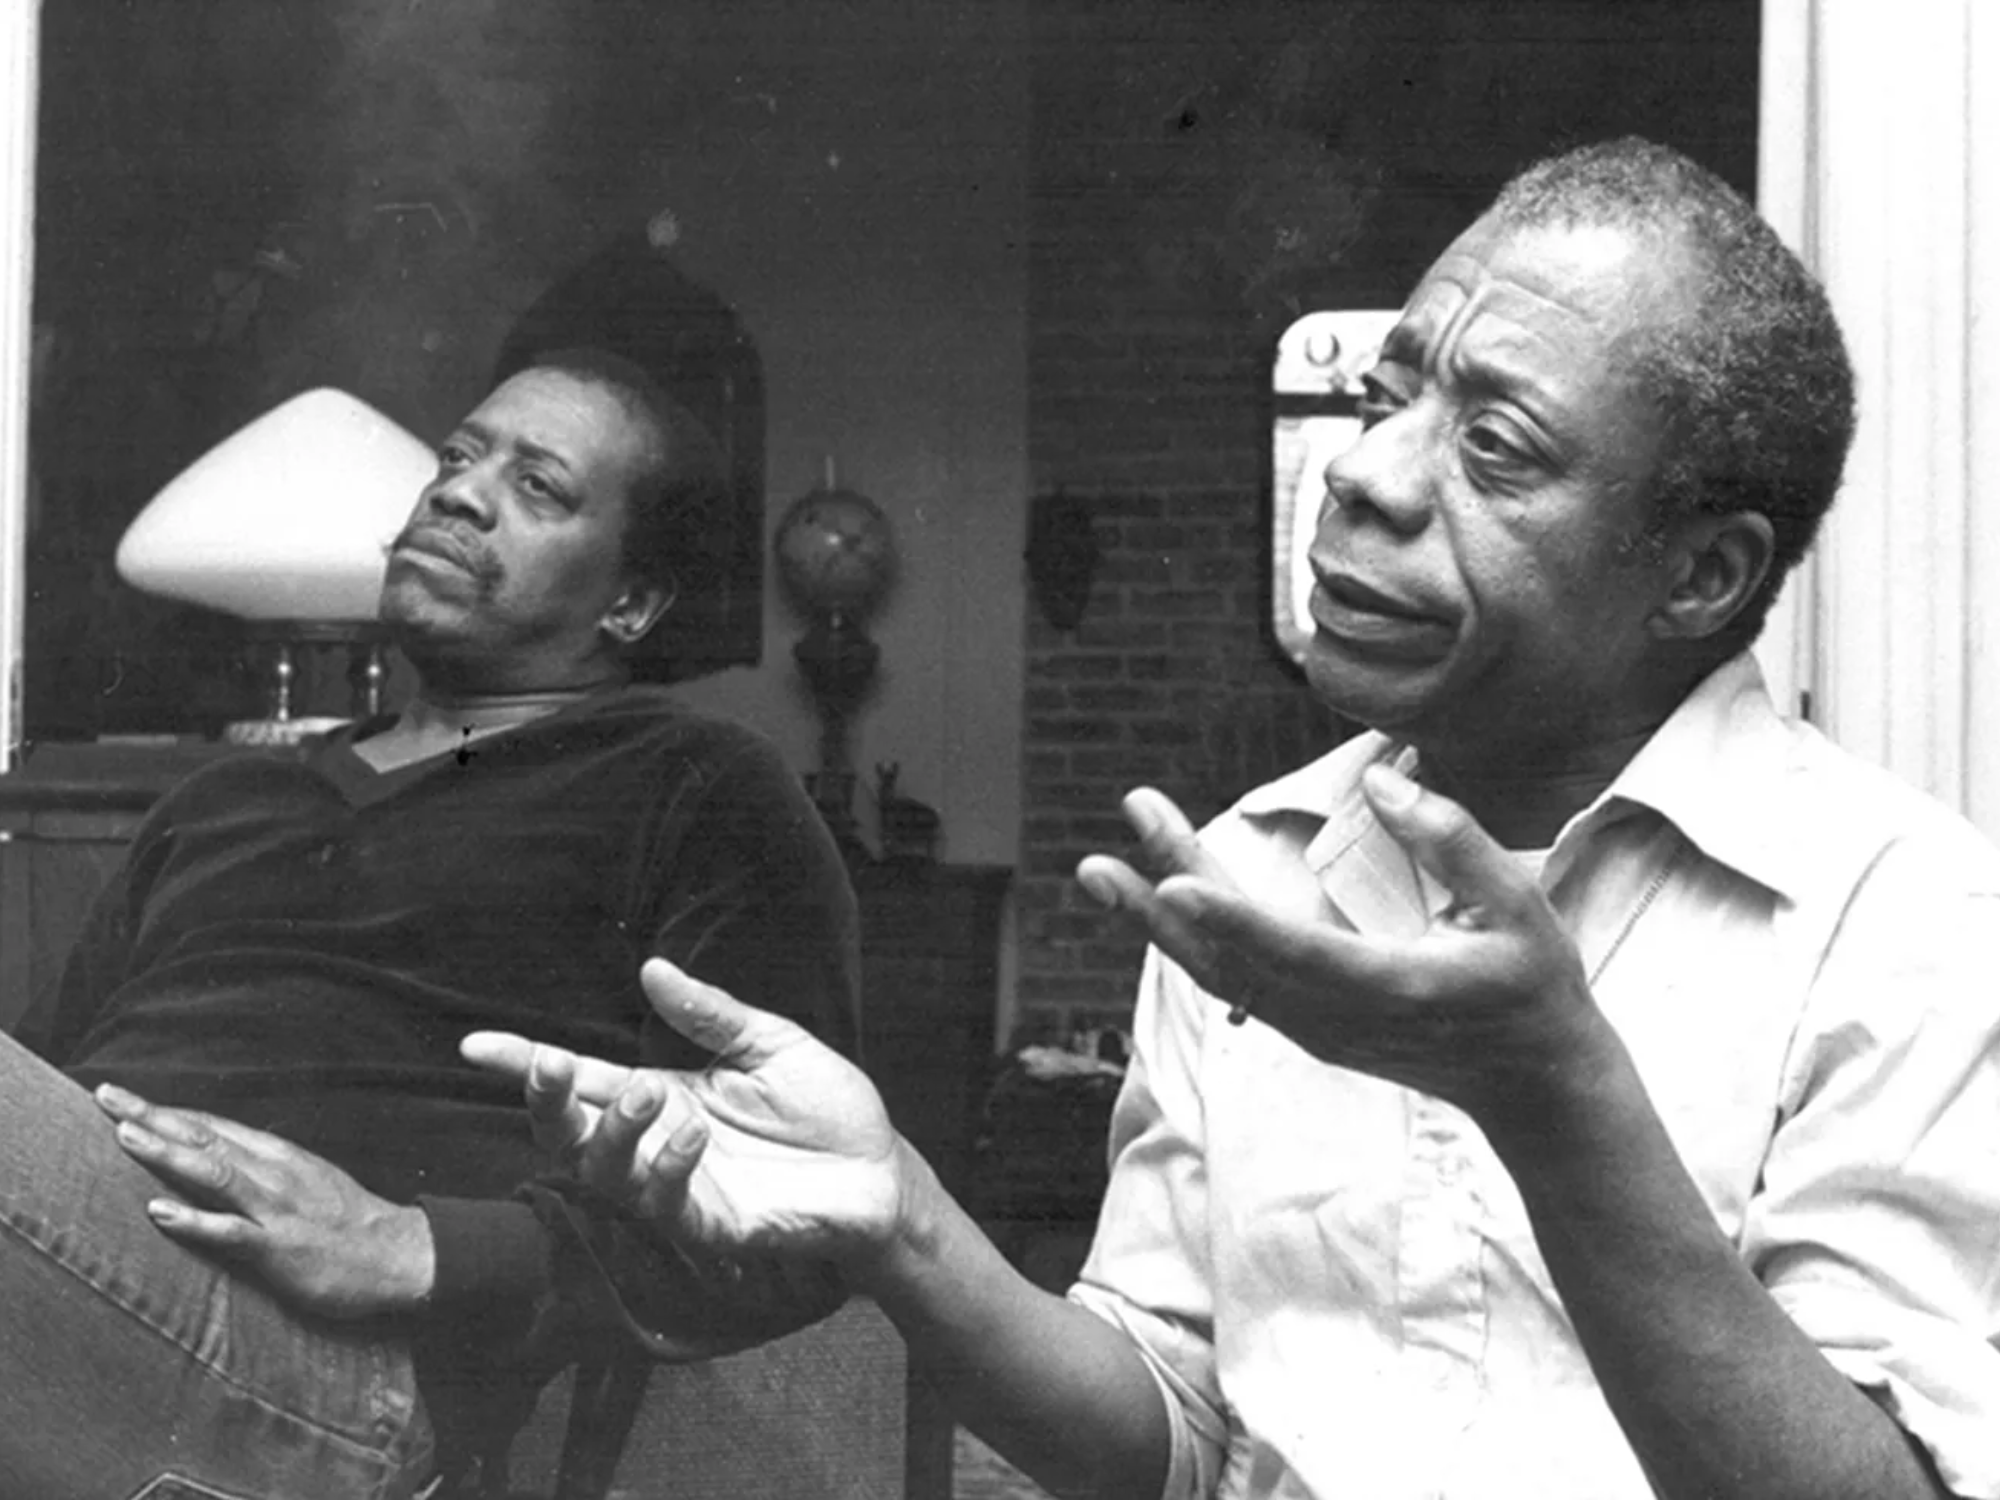 James Baldwin at 100: I Heard It Through The Grapevine